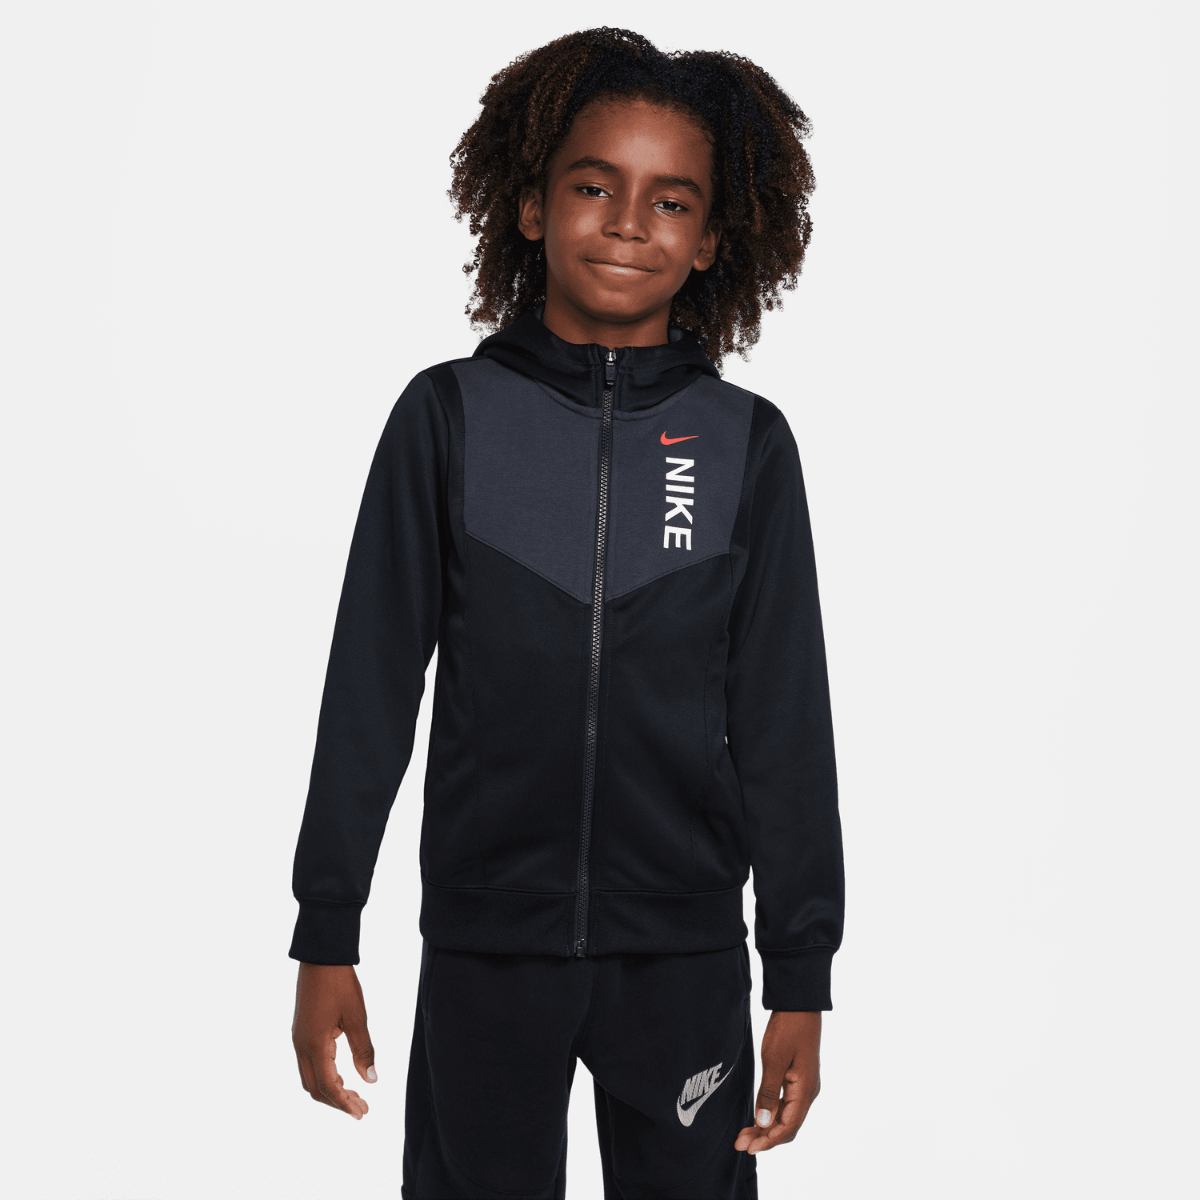 Weste Nike Sportswear Hybrid Junior - Schwarz